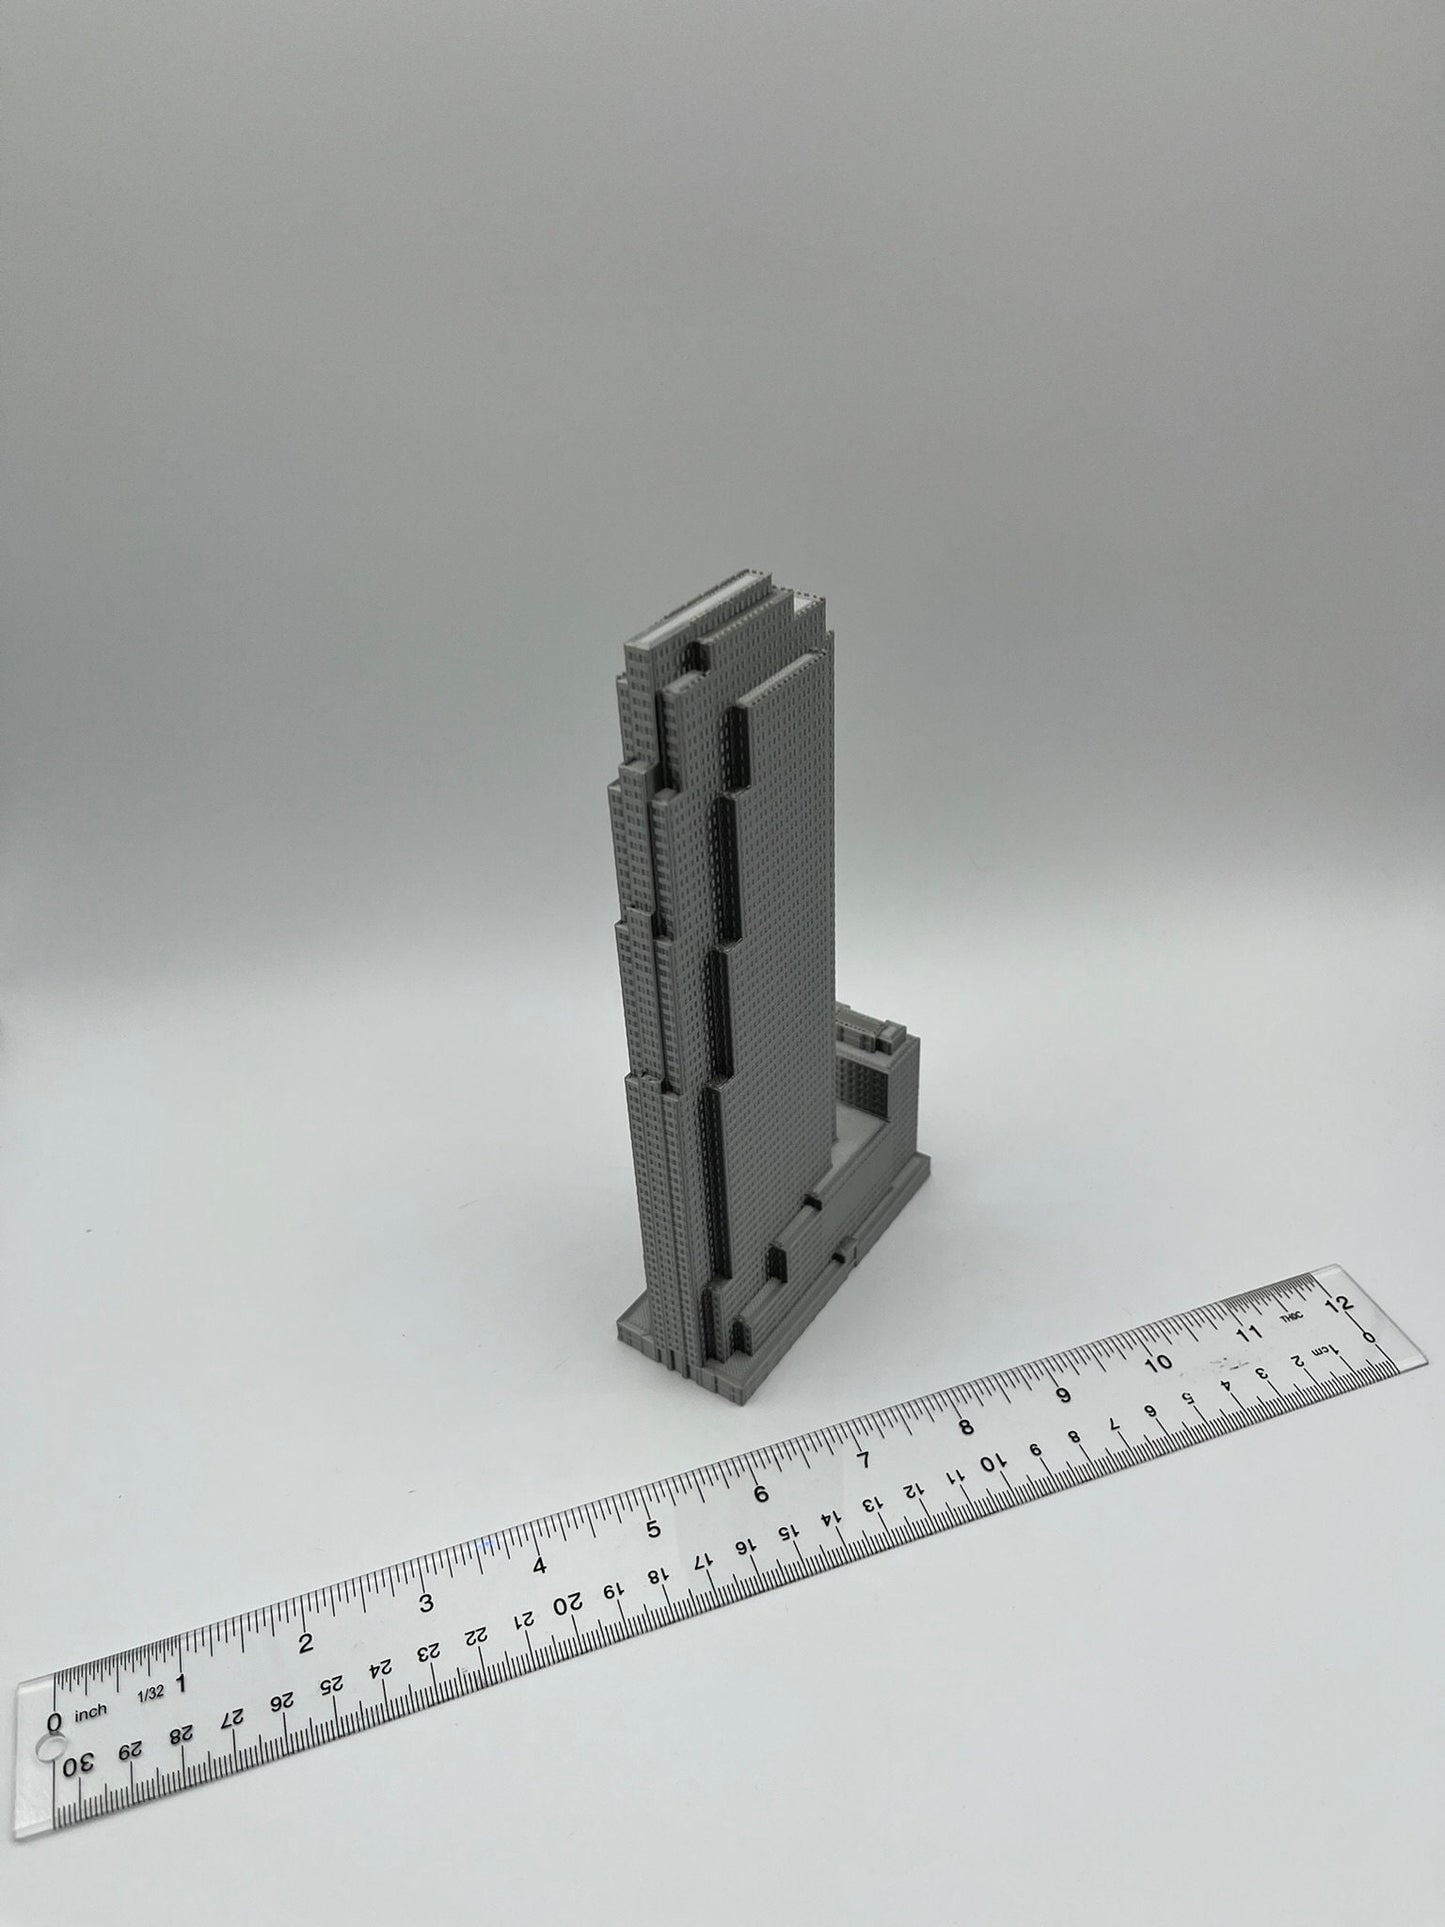 30 Rockefeller Plaza Model- 3D Printed